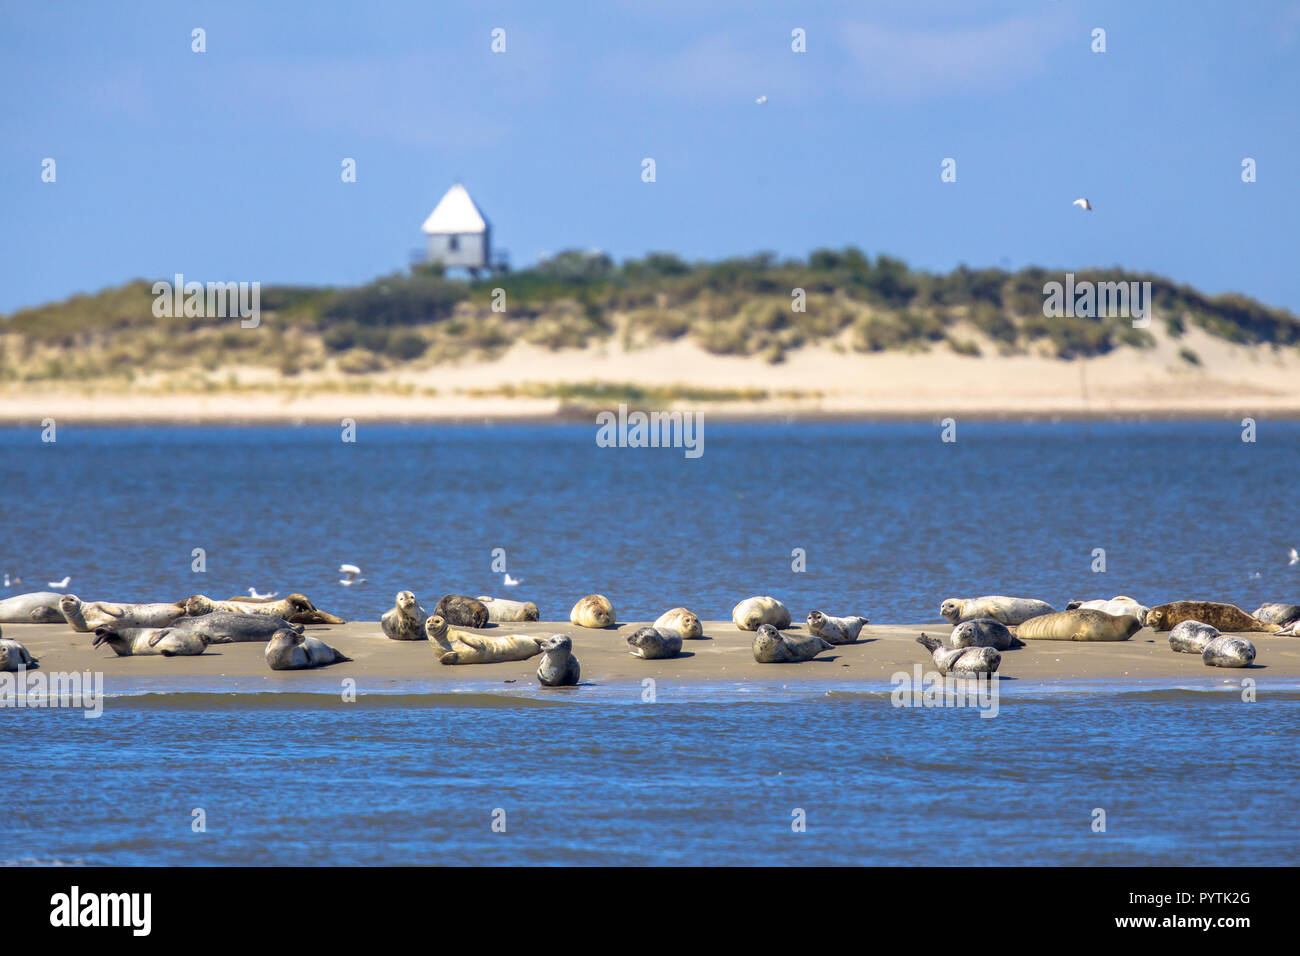 Juntas en un arenal cercano Rottumerplaat deshabitada isla en el mar de Wadden Foto de stock